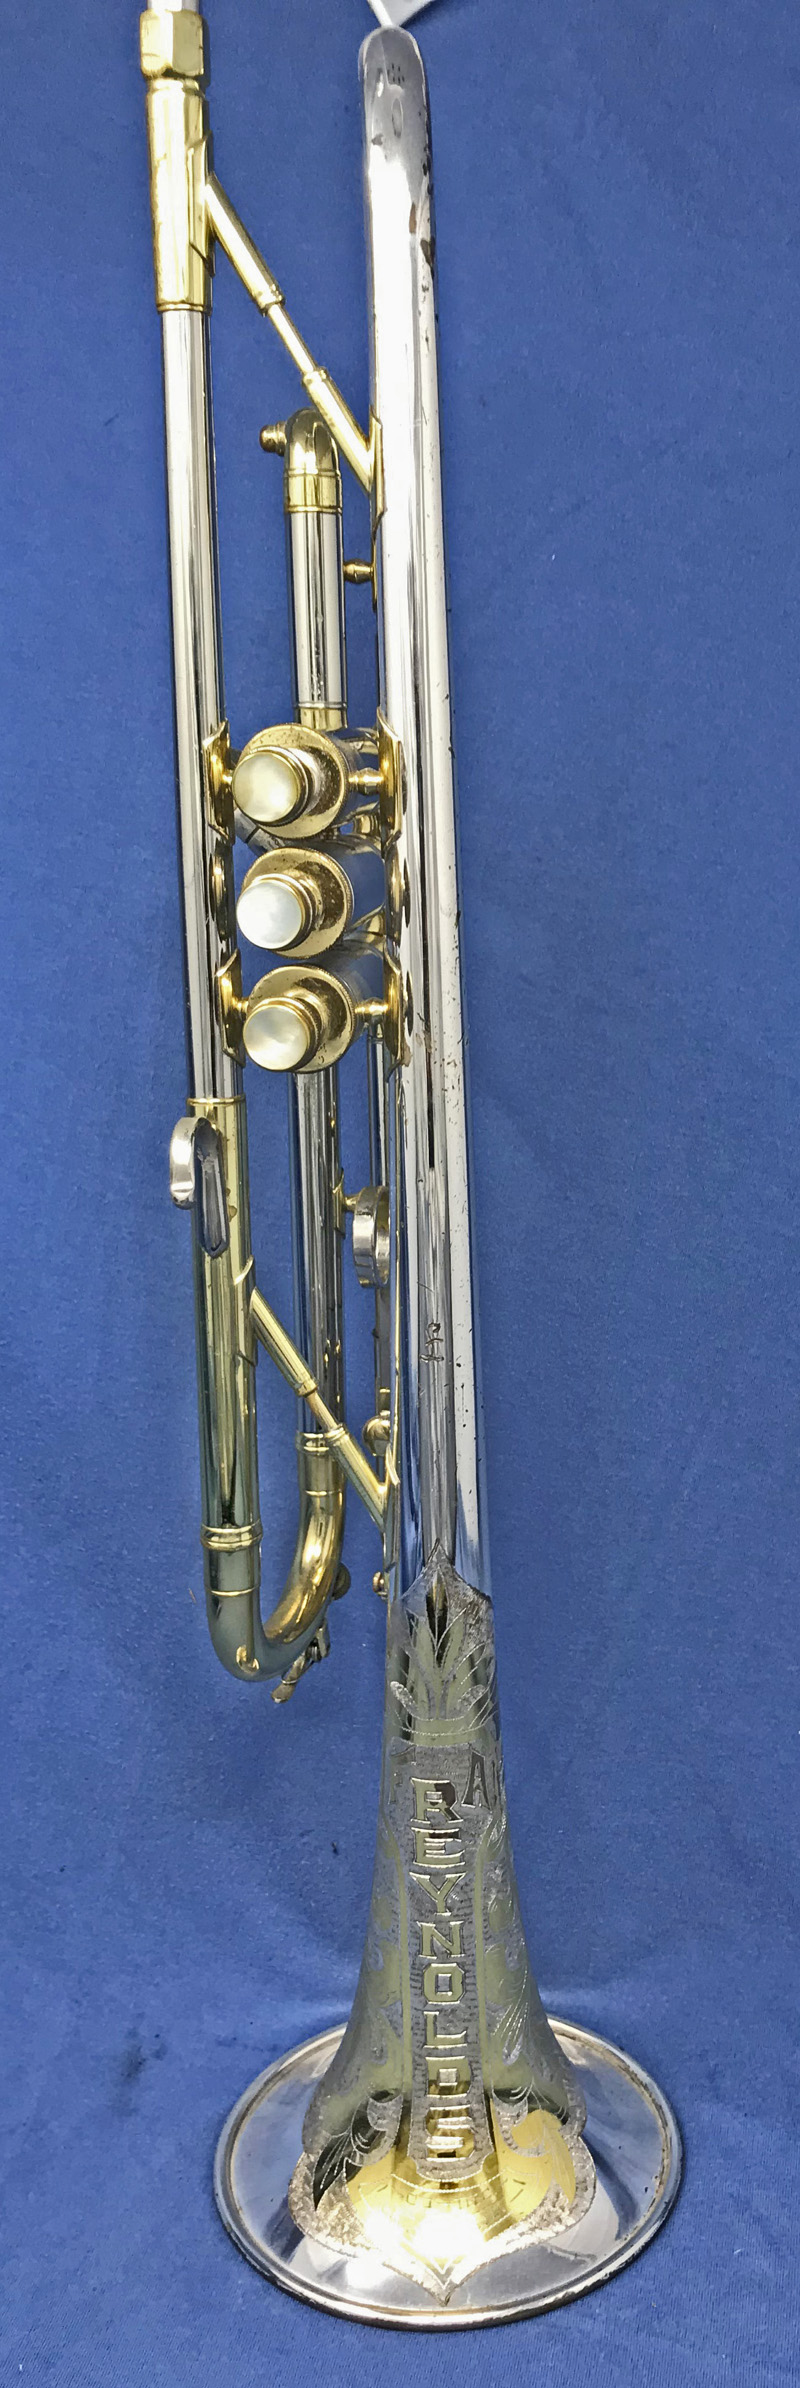 Reynolds Professional Trumpet